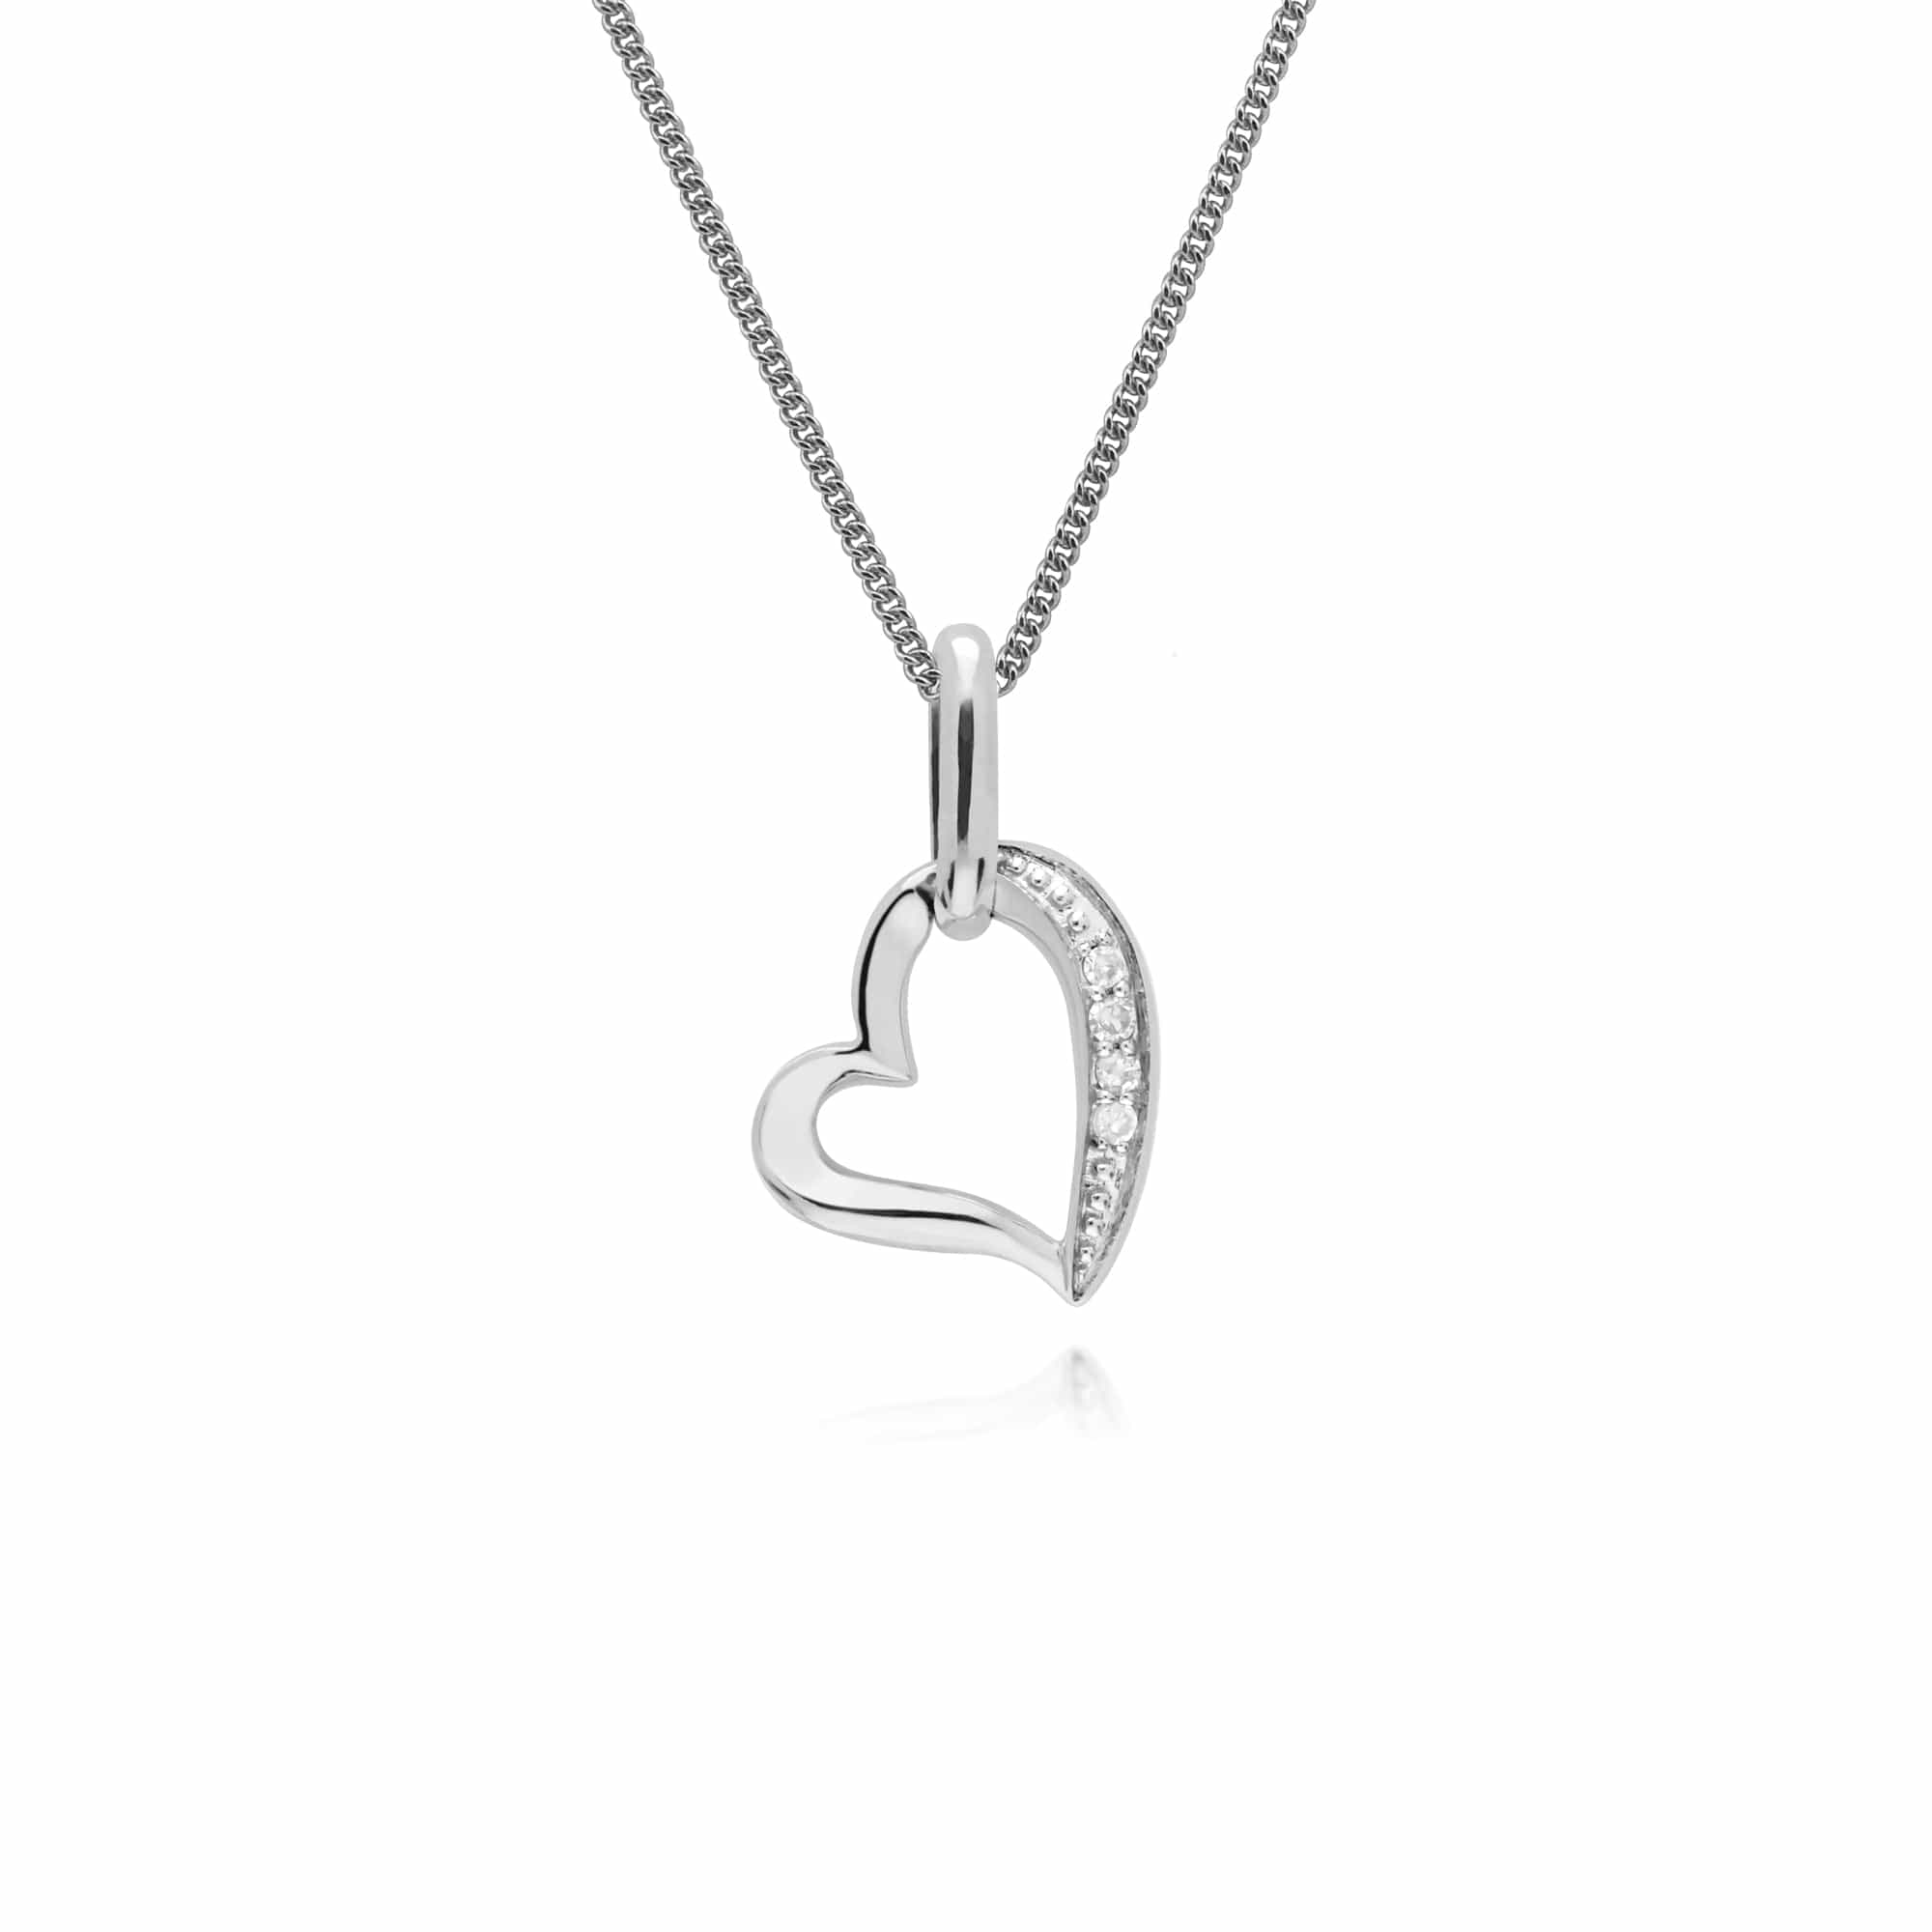 Gemondo 9ct White Gold Diamond Stylish Heart Pendant on 45cm Chain - Gemondo